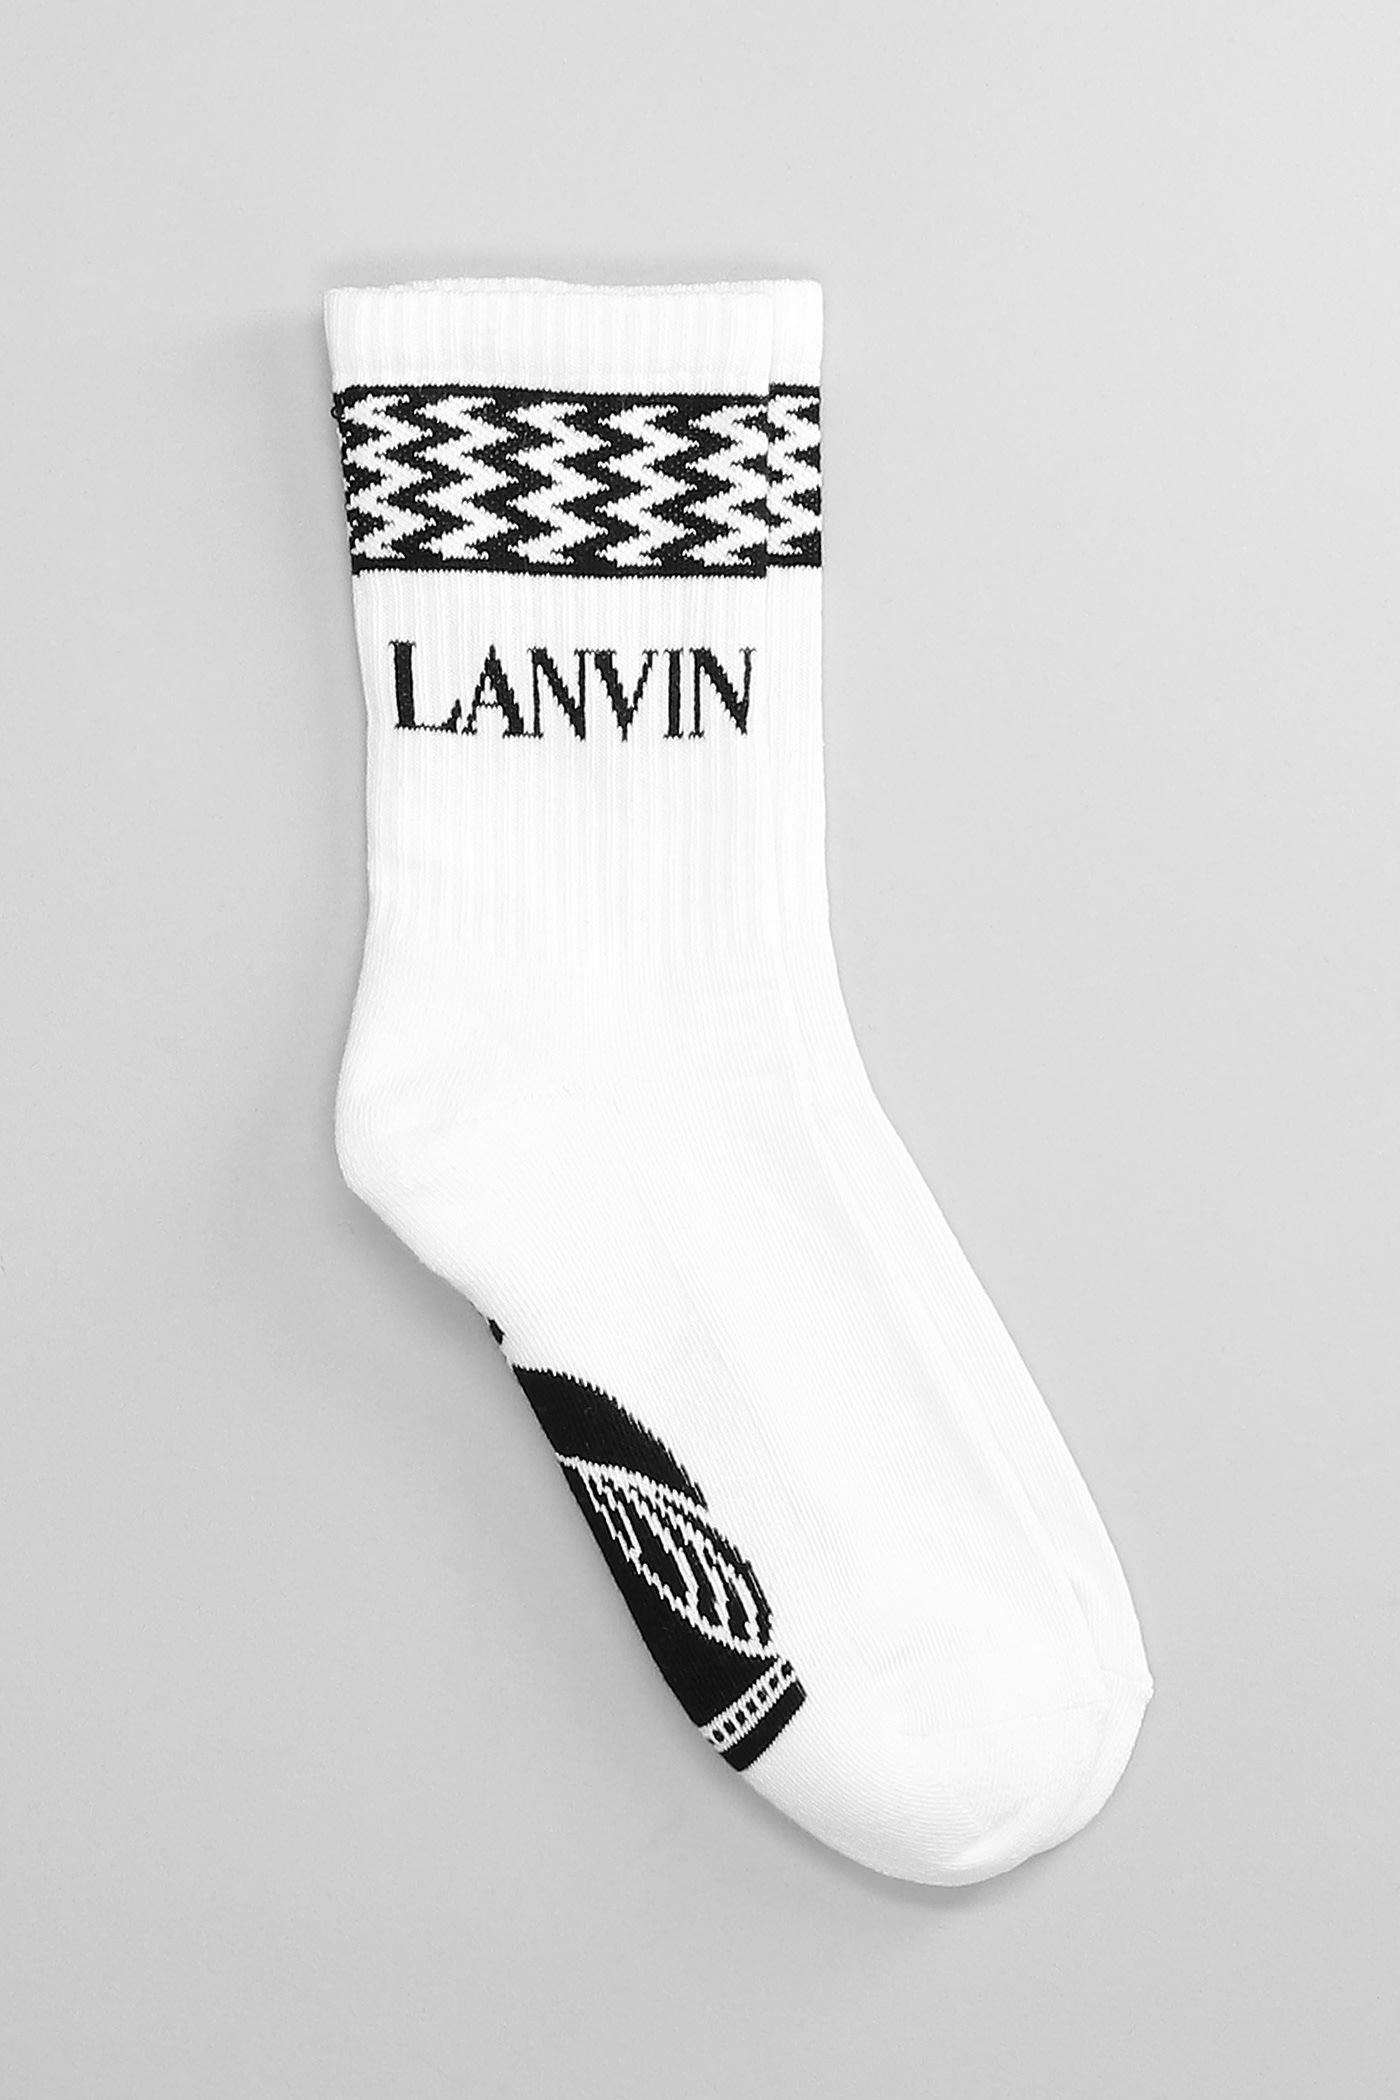 LANVIN SOCKS IN BLACK AND WHITE COTTON